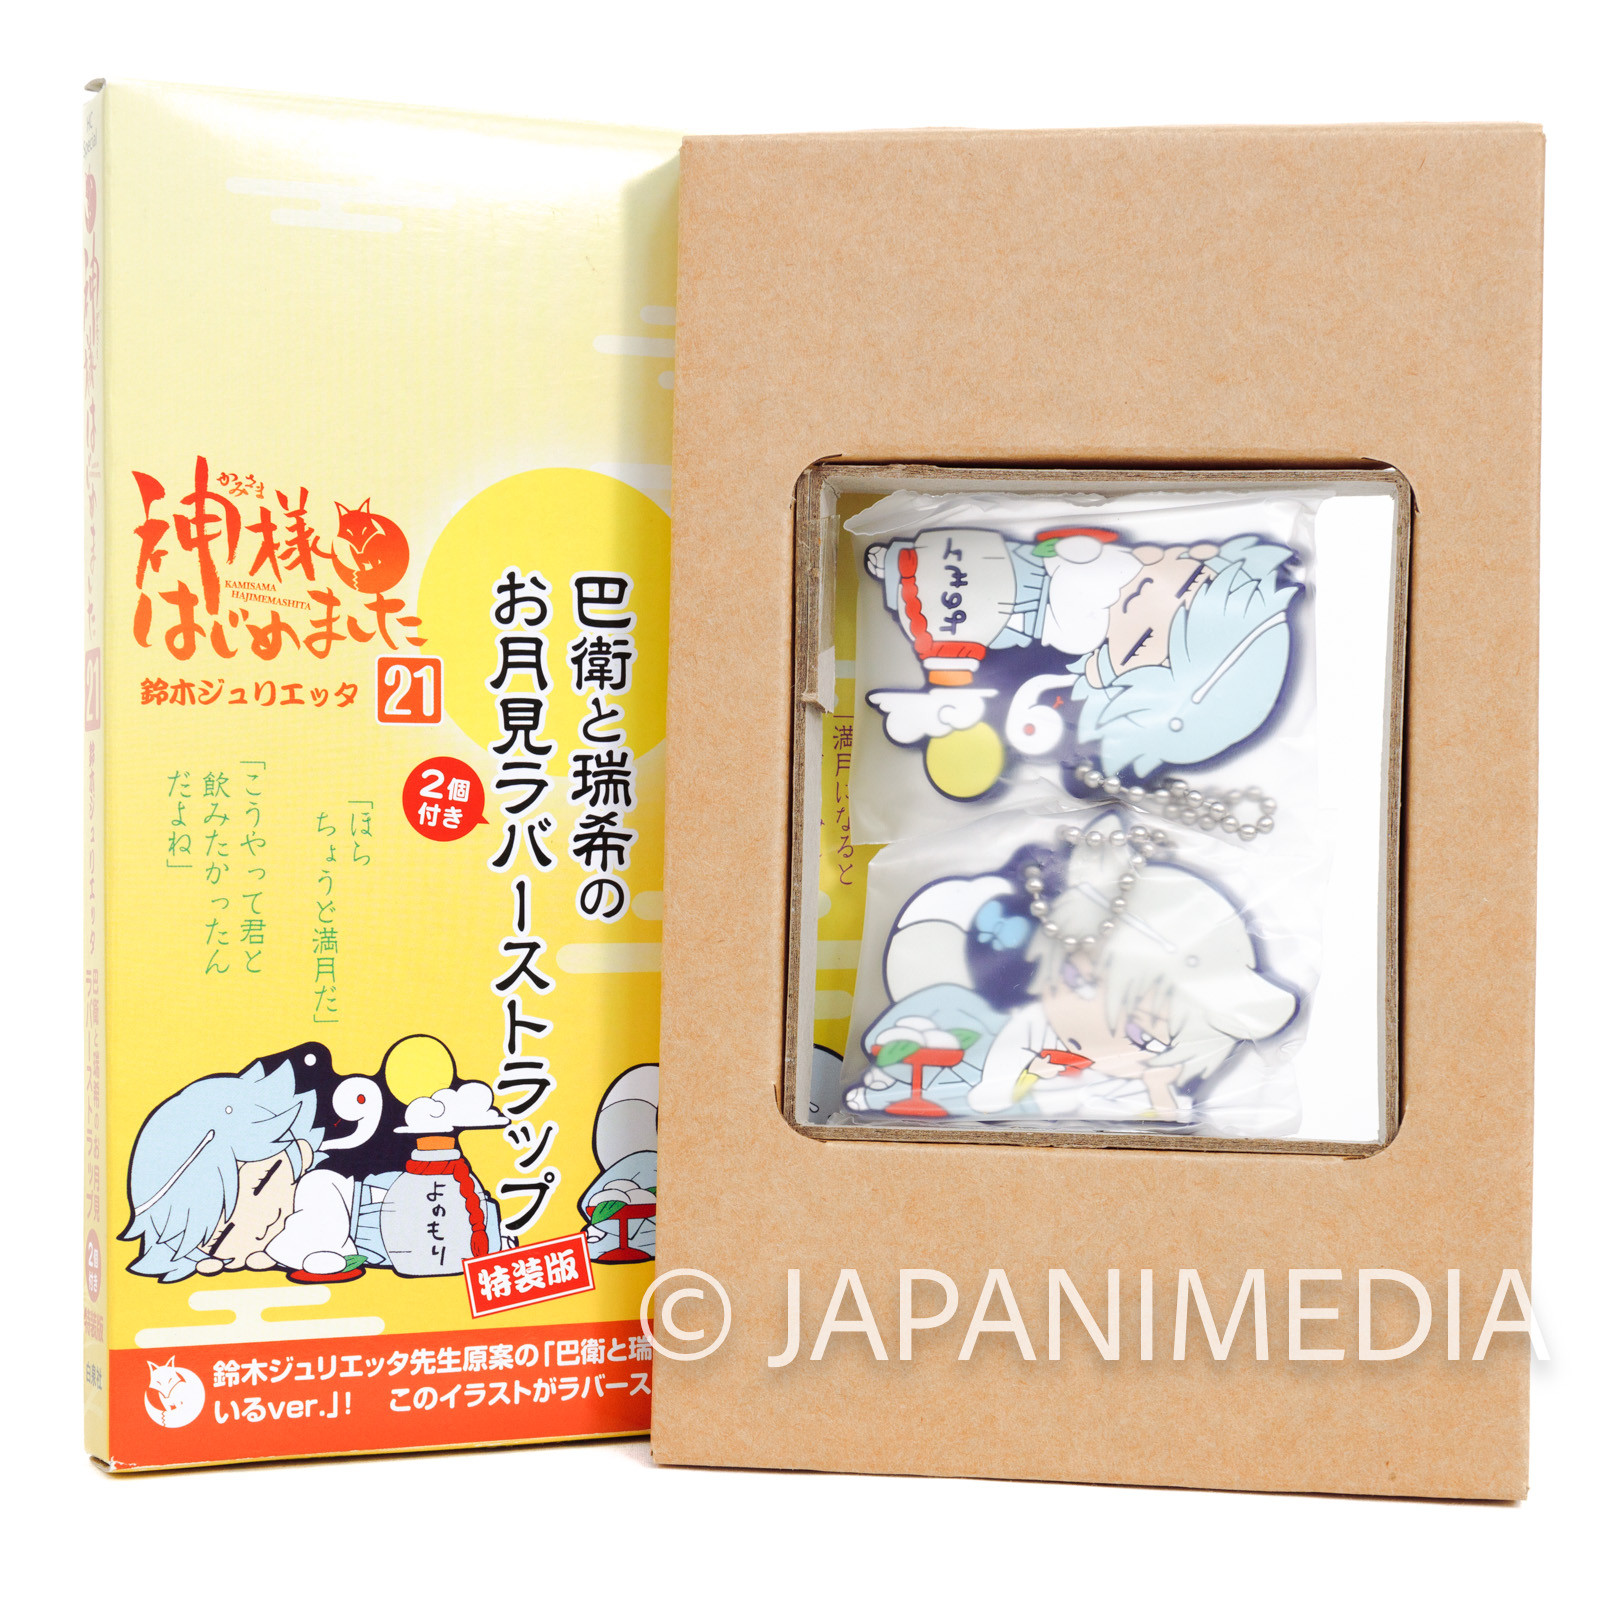 Kamisama Kiss Tomoe & Mizuki Otsukimi Rubber Mascot Ball key chain 2pc Set with Comic vol.21